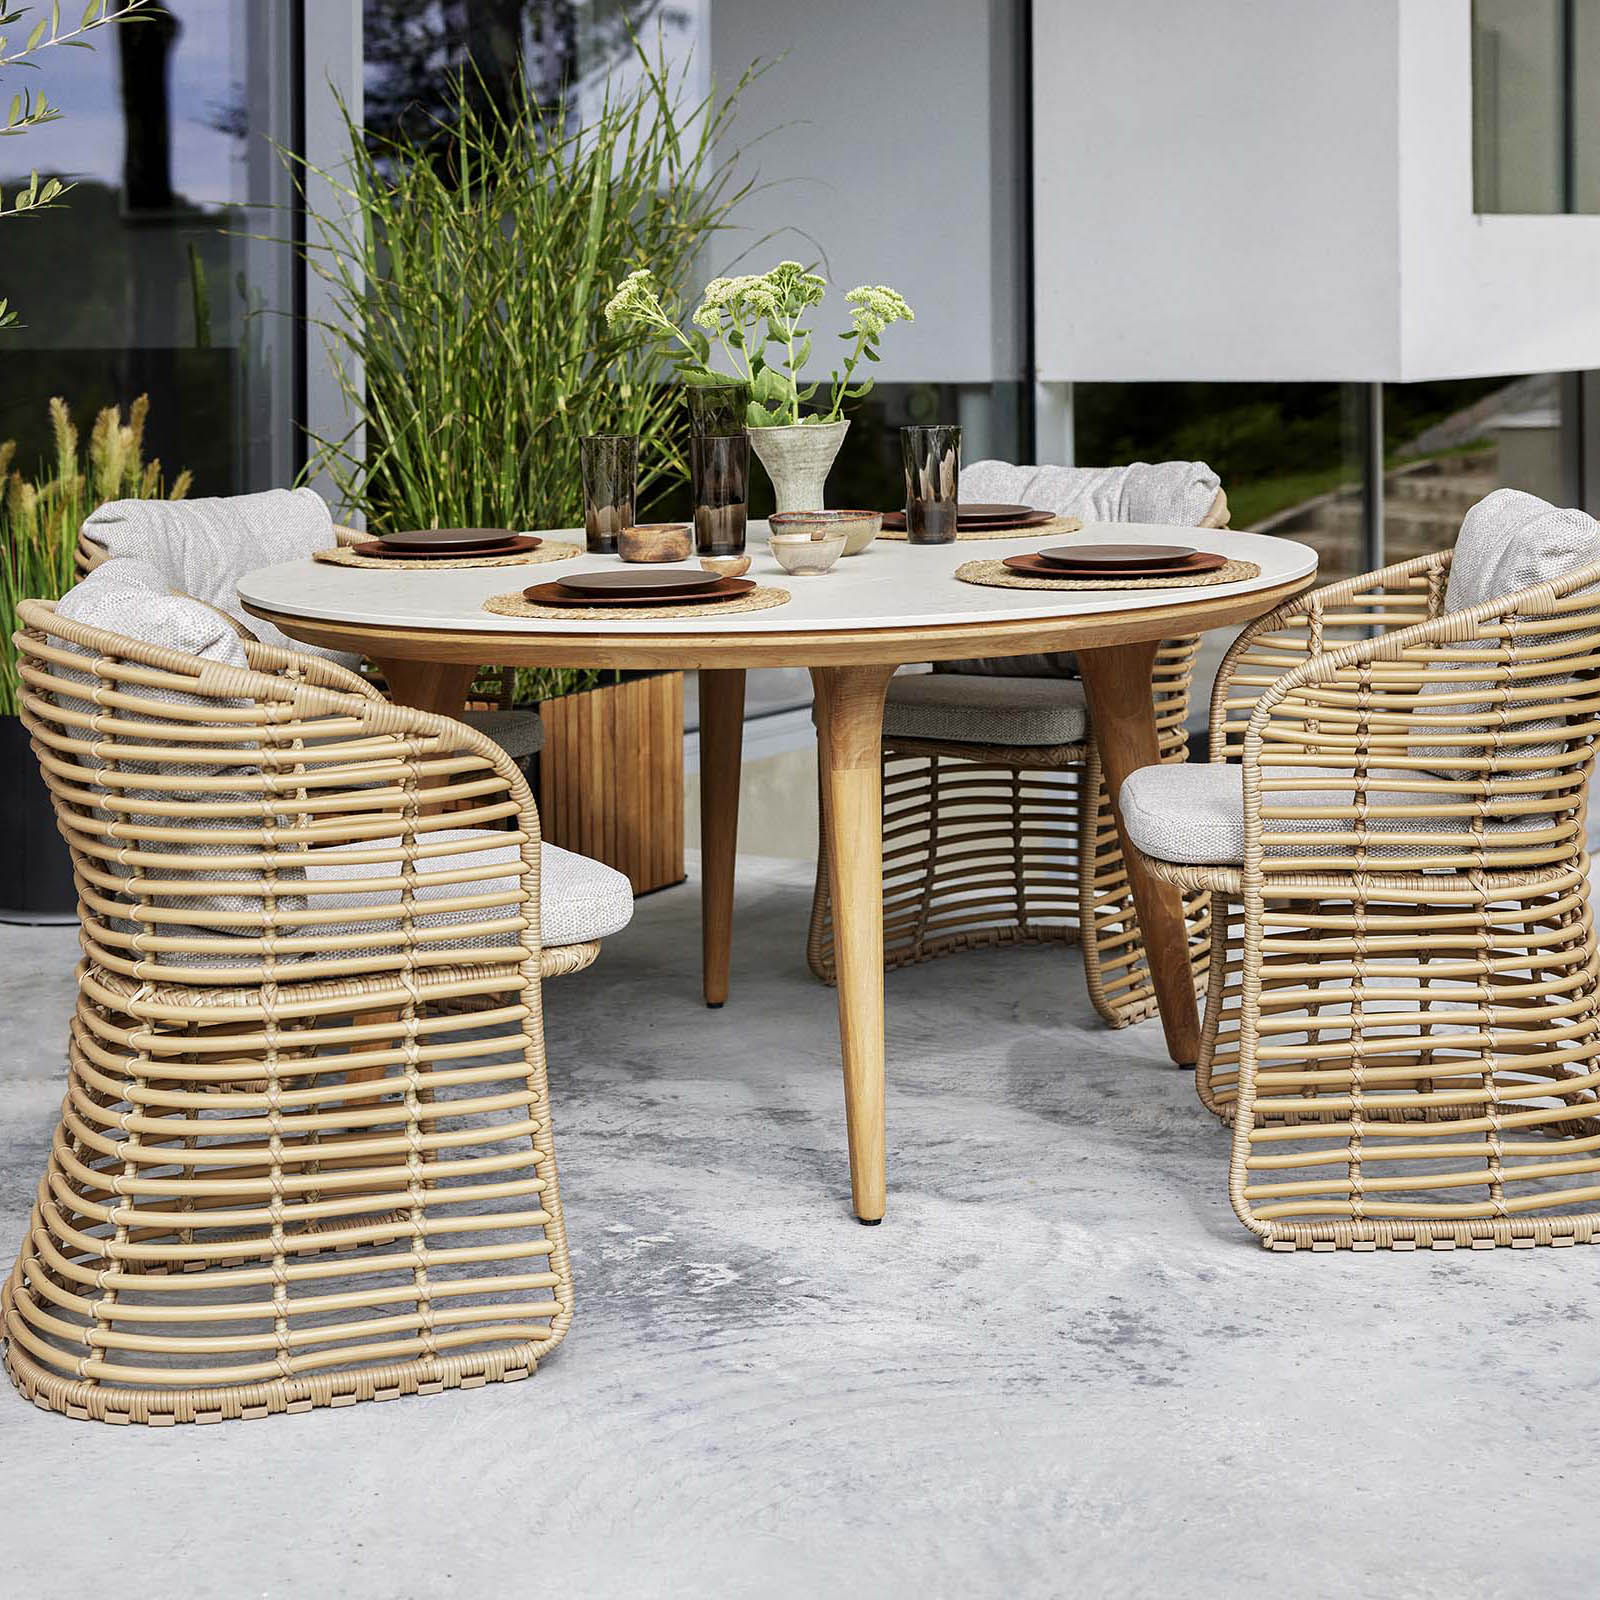 Basket Sessel aus Cane-line Weave in Natural